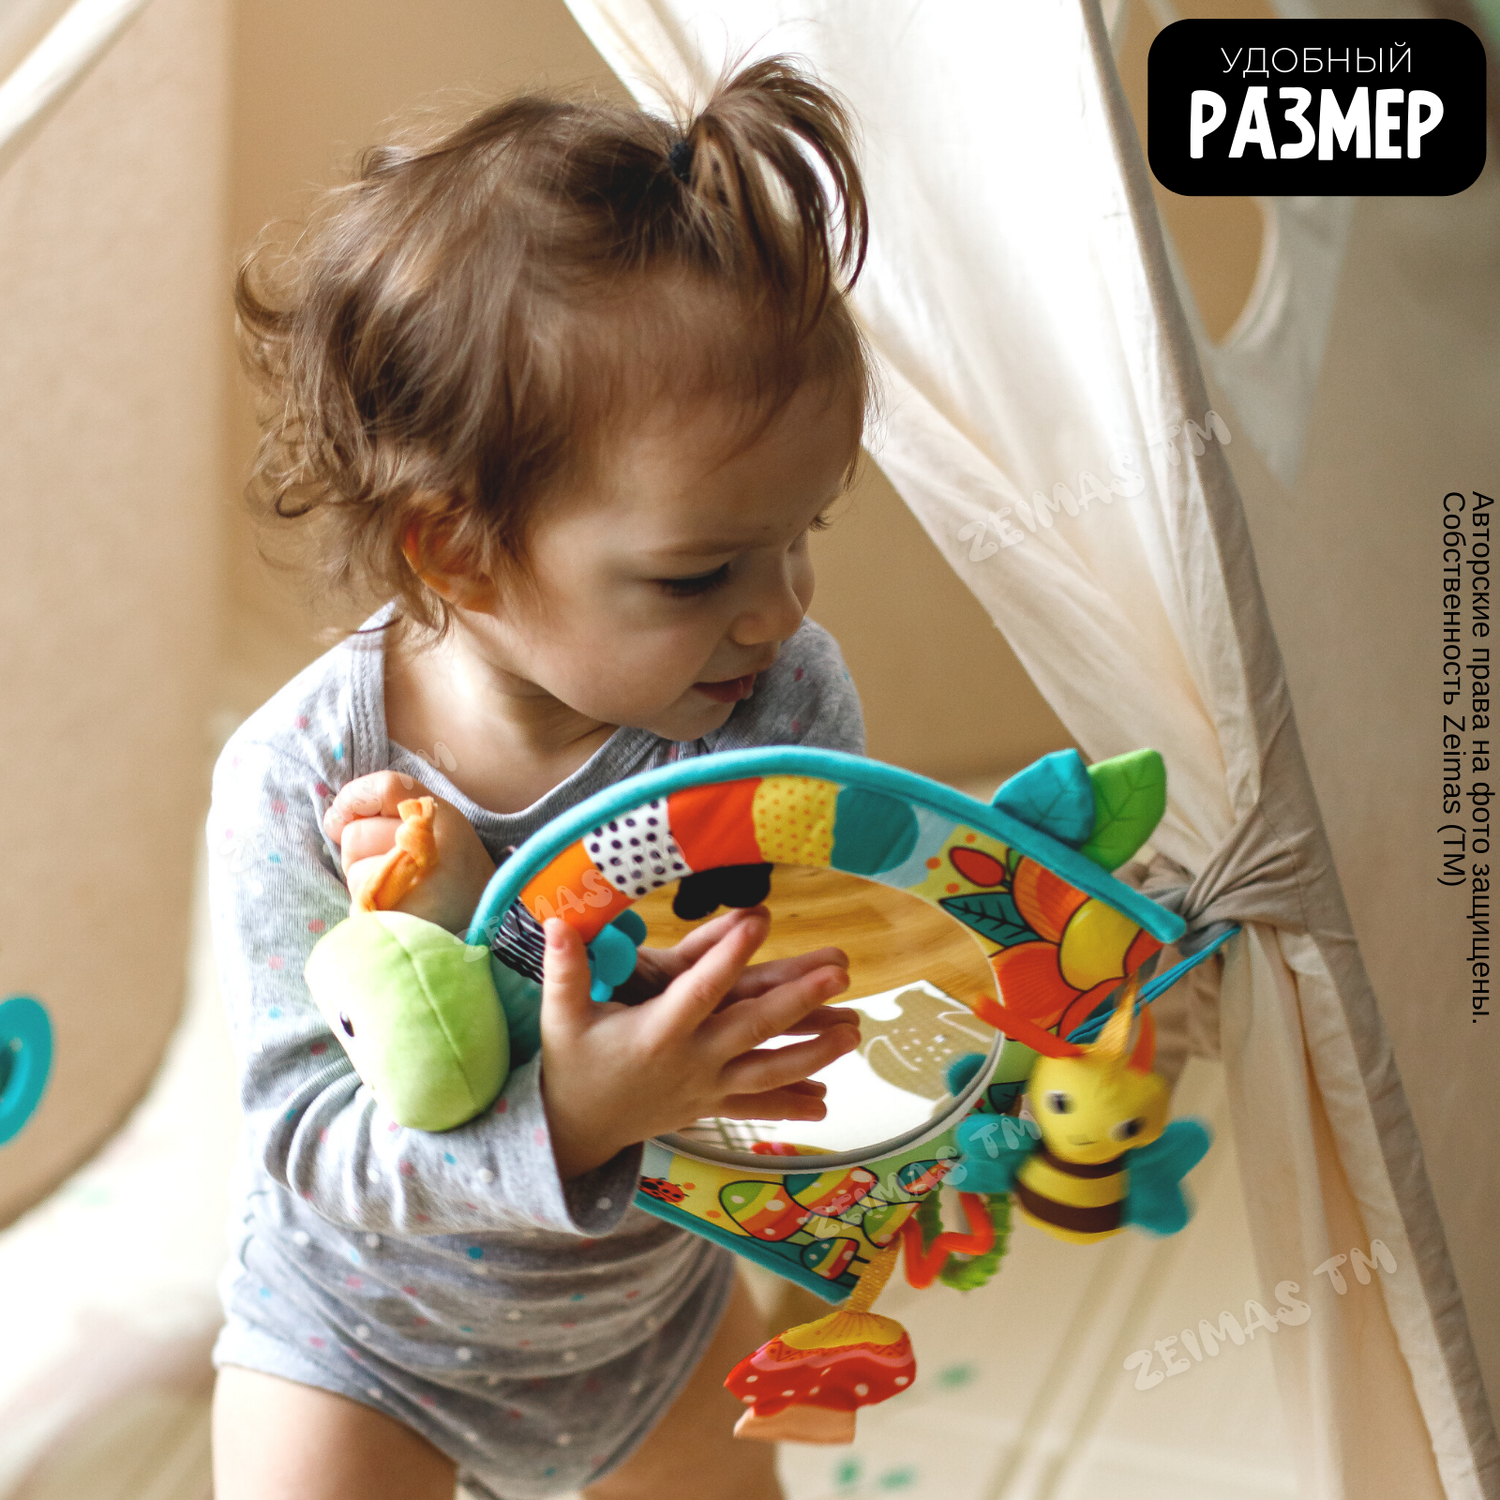 Игрушка-подвеска развивающая Zeimas Гусеница с зеркалом погремушка - фото 6